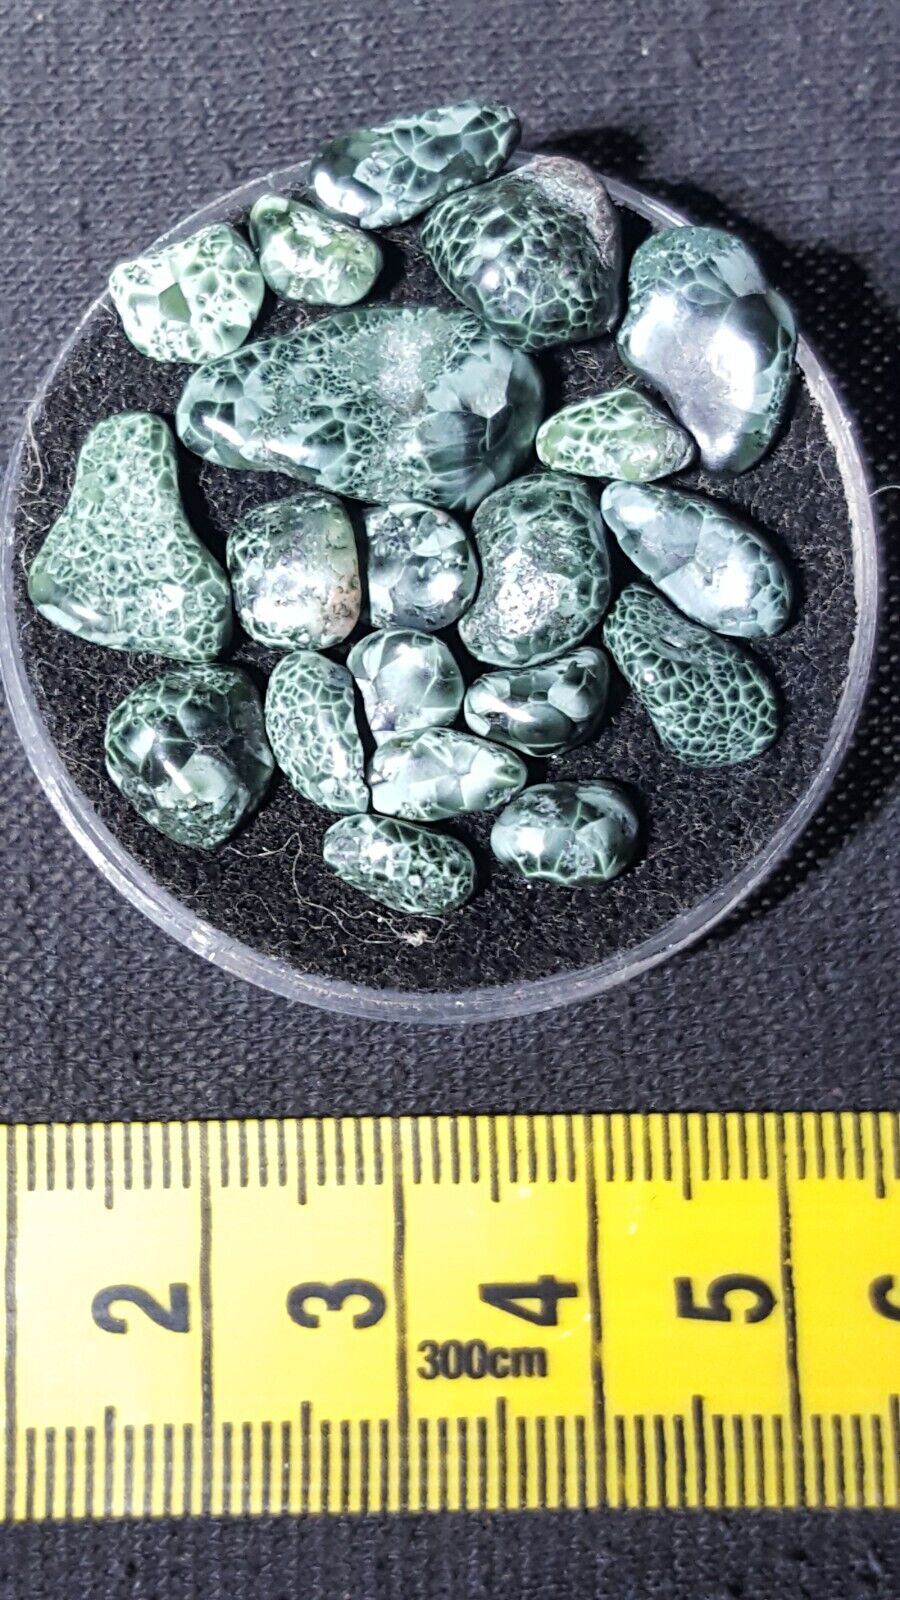 Polished Chlorastrolite Michigan Greenstone great looking gems.